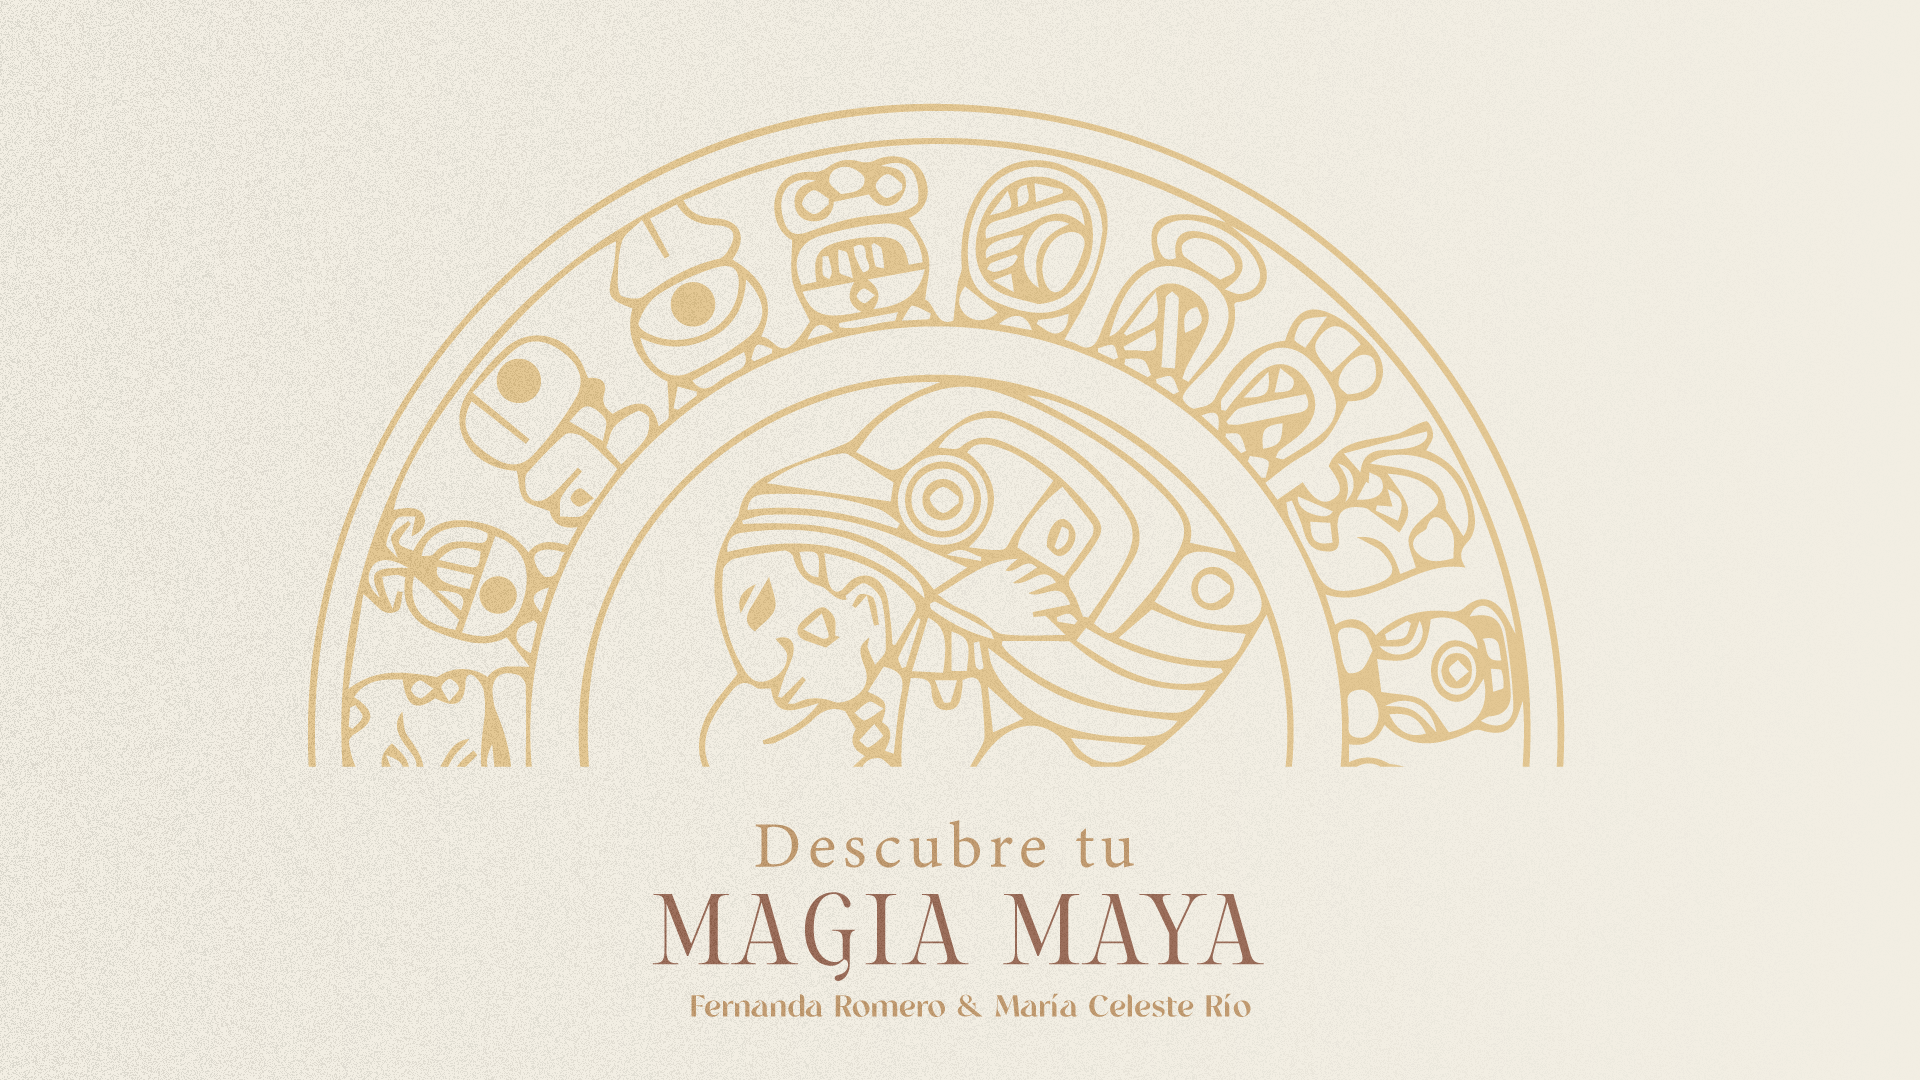 Descubre tu magia maya